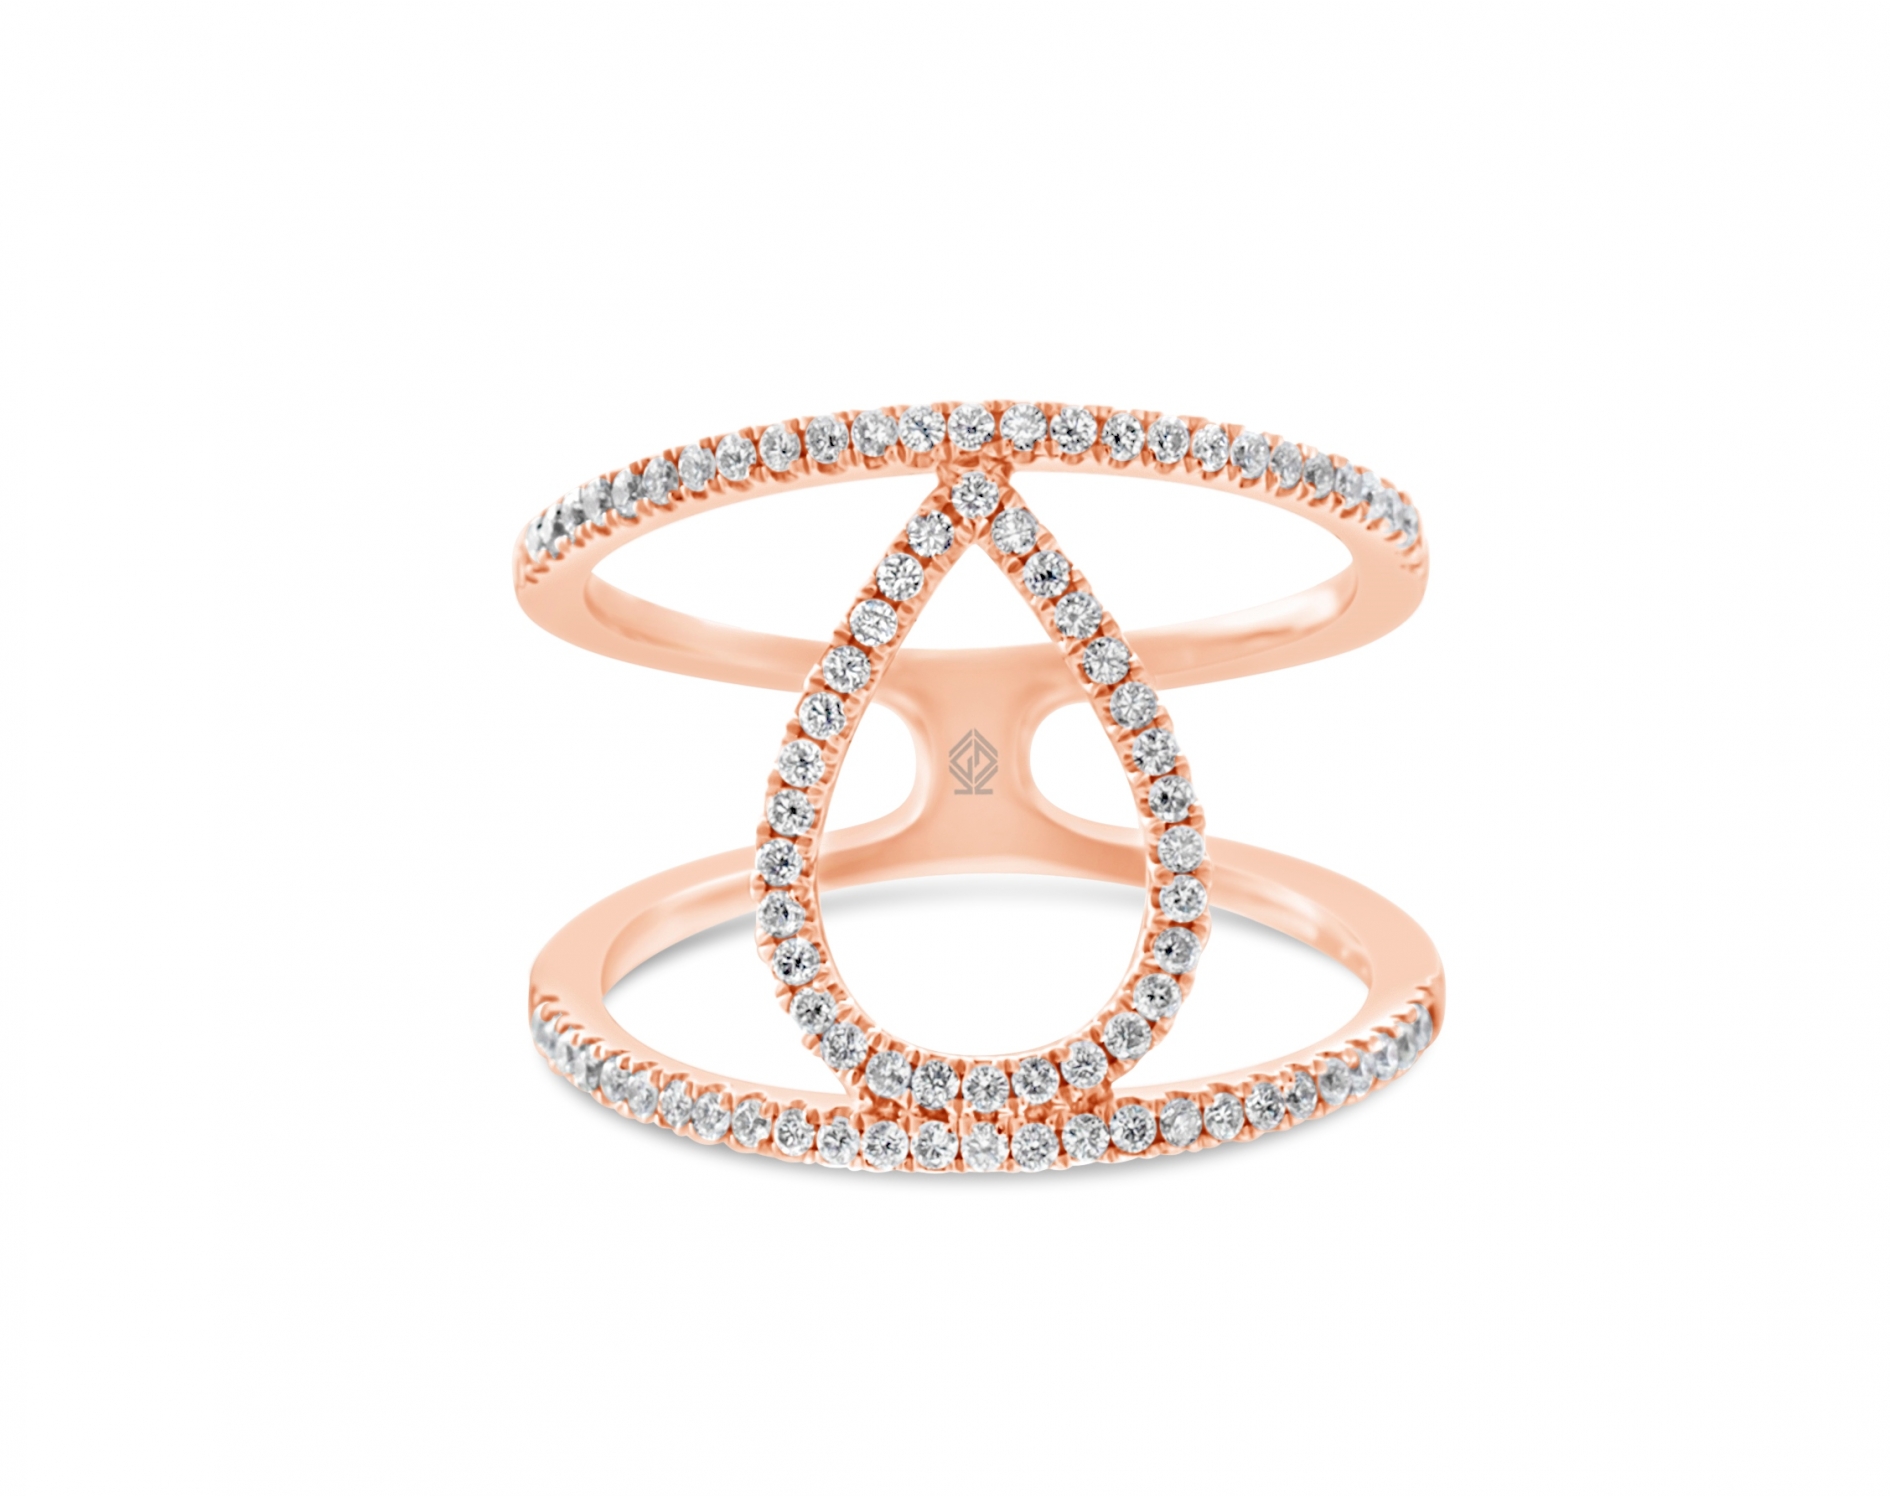 18k rose gold pear-fashion round shaped diamond ring